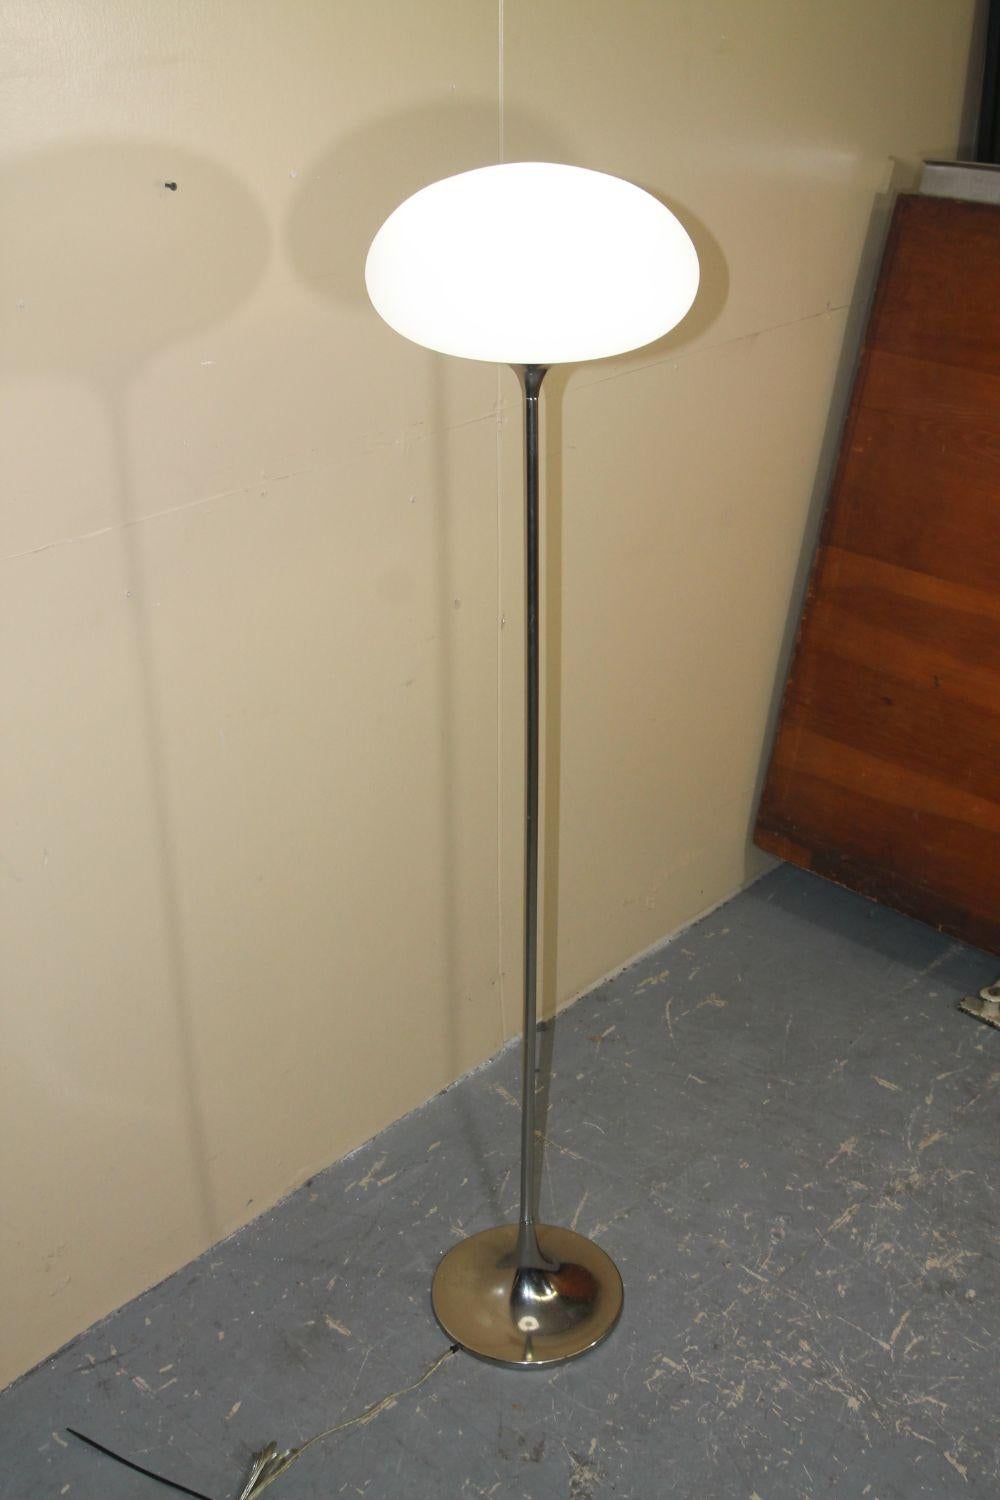 Iconic Laurel Lamp Co mushroom floor lamp. Lamp is in great vintage shade and retains its original white glass mushroom shade.